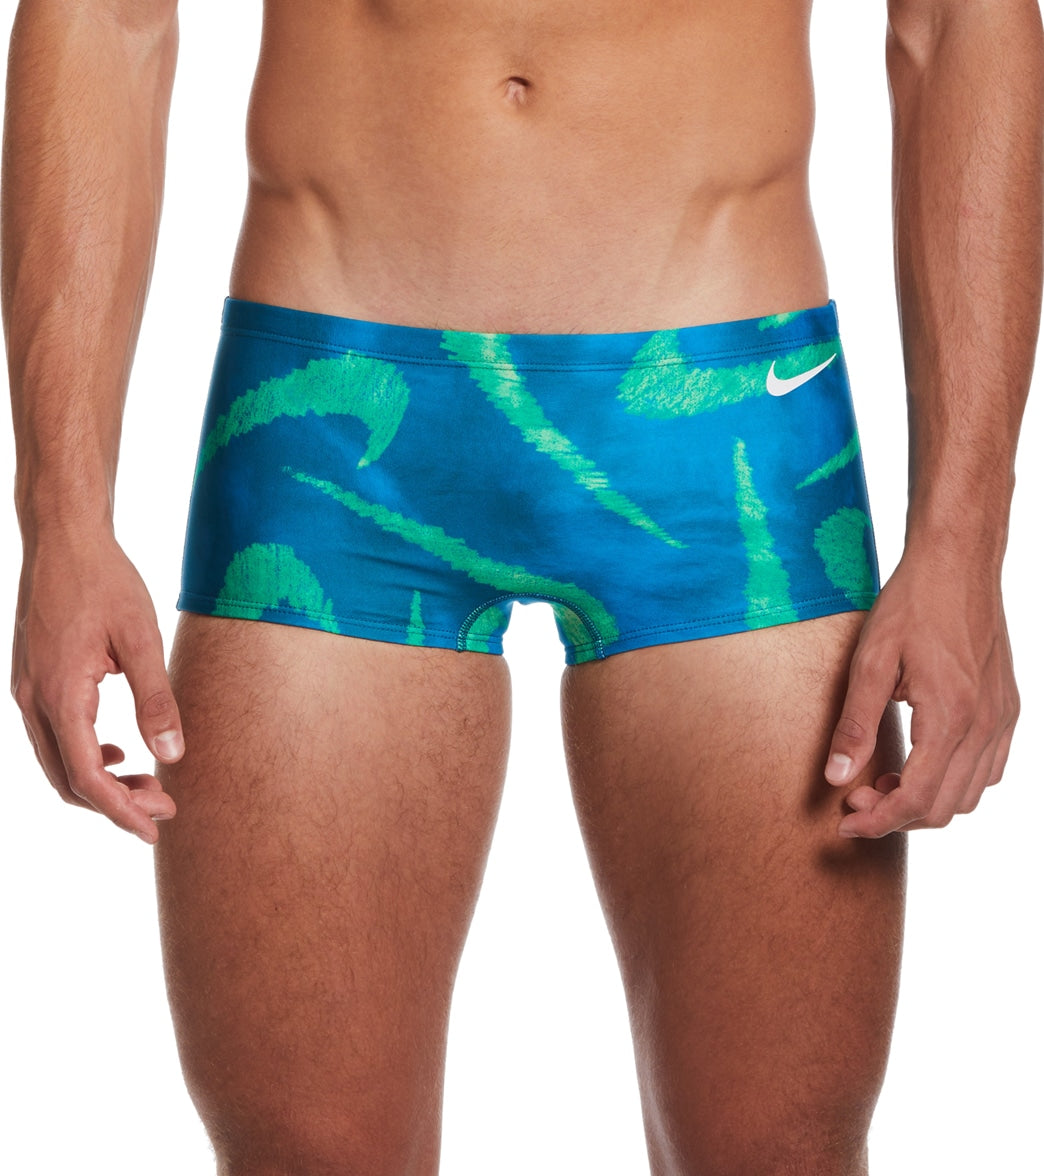 Nike Men's HydraStrong Multi Print Square Leg Swimsuit at SwimOutlet.com